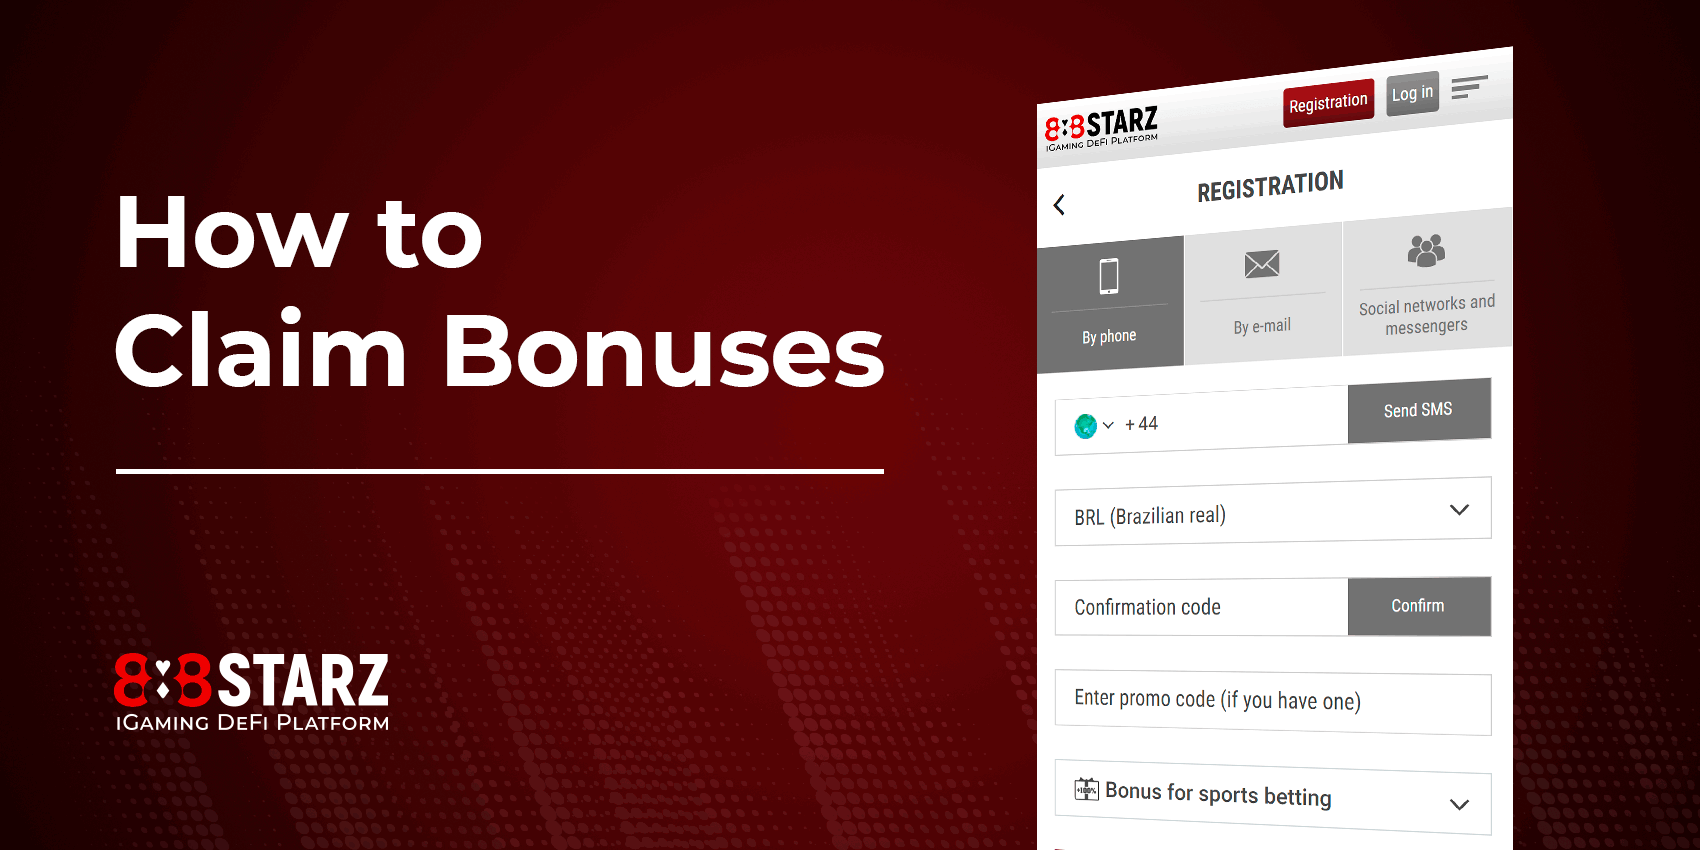 How to Claim Bonuses